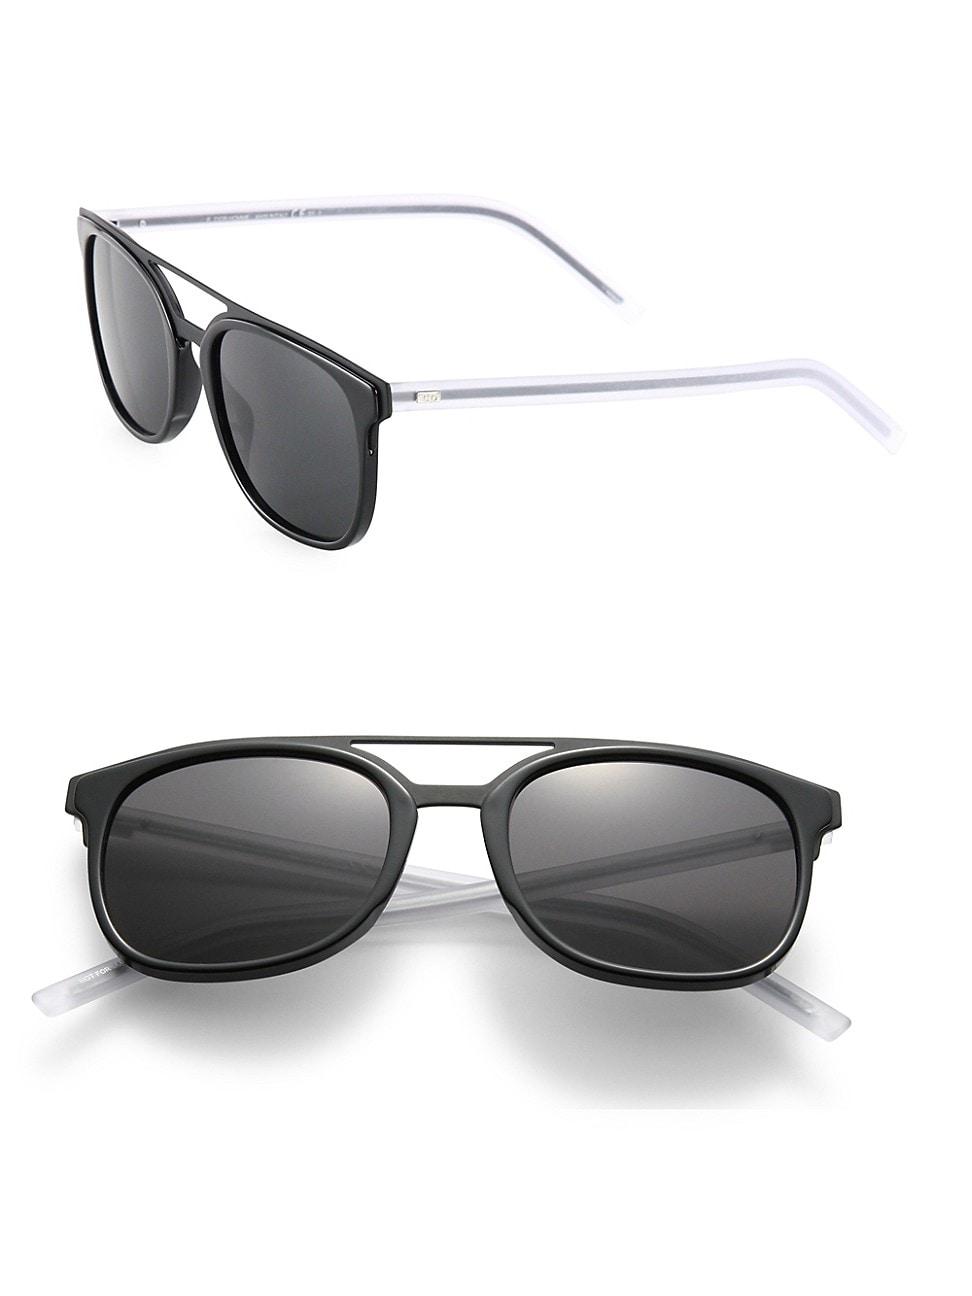 Dior Sunglasses Black Tie 220S T69 NR 51  The Optic Shop